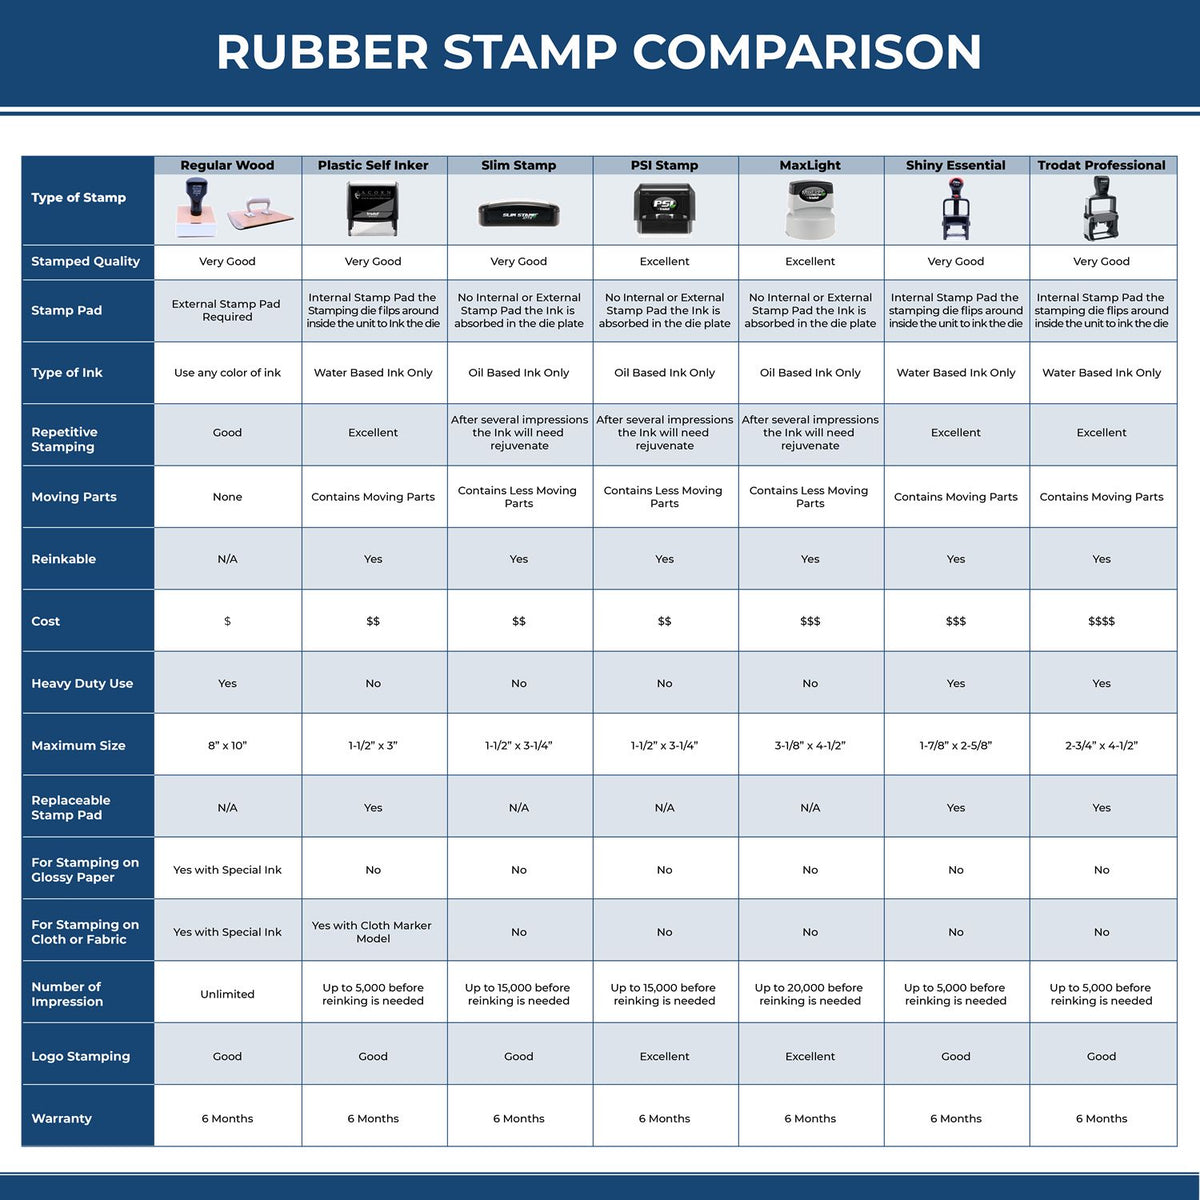 Standard Mail Rubber Stamp 4749R Rubber Stamp Comparison